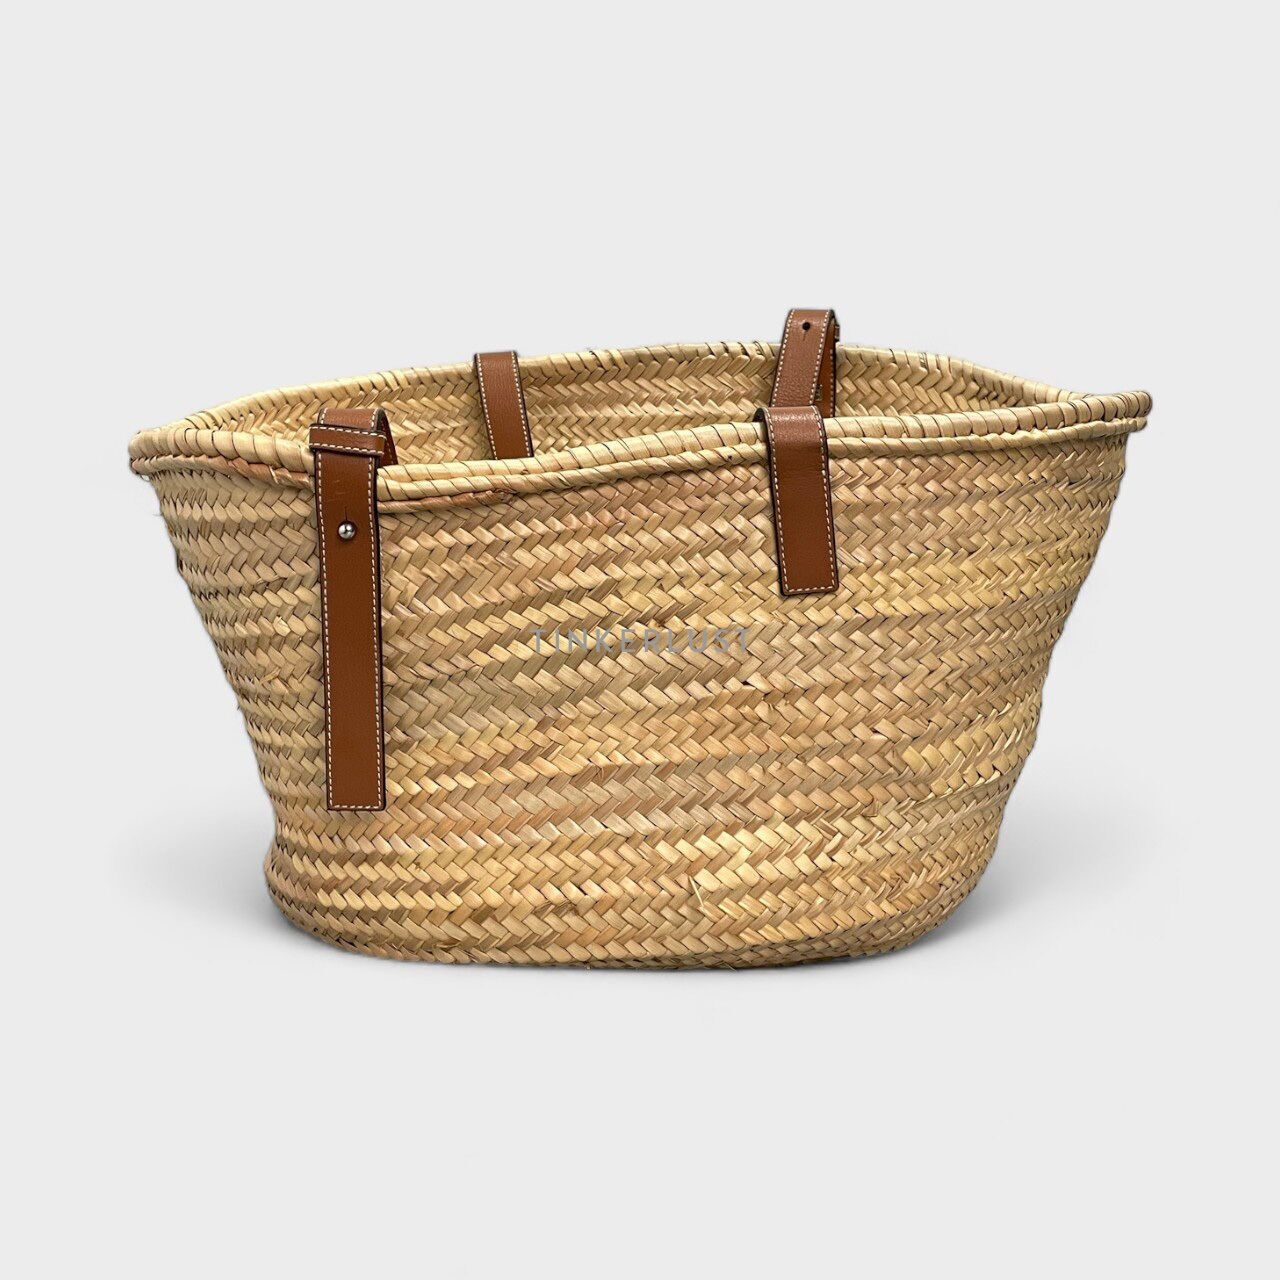 Loewe Basket Bag Palm Leaf & Calfskin 2018 Tote Bag